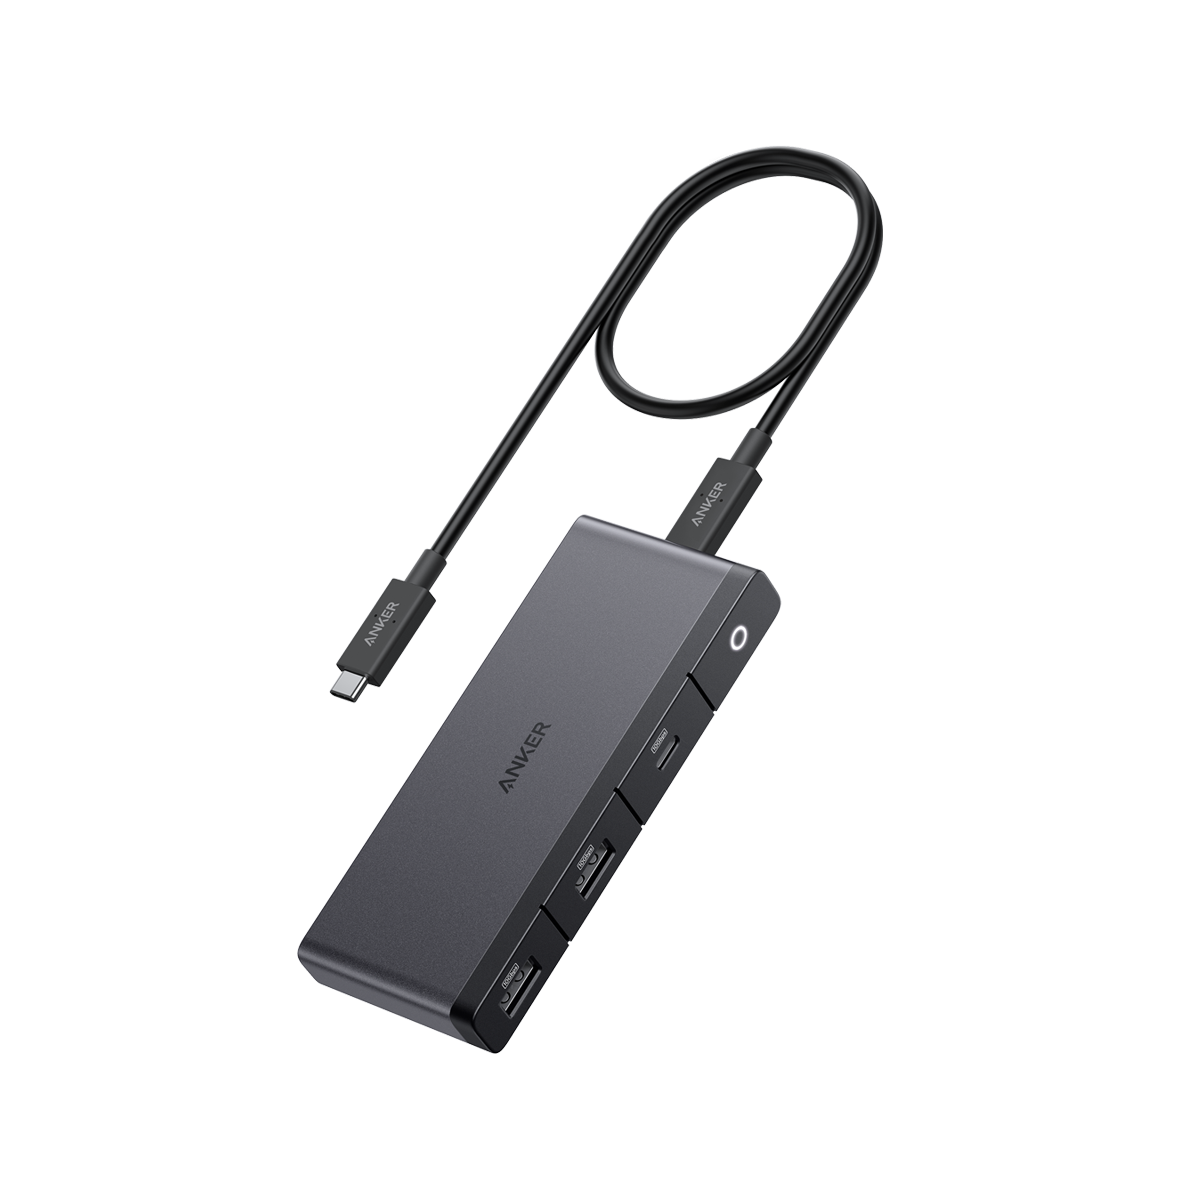 Anker 322 USB-C Hub (5-in-1) - Anker US